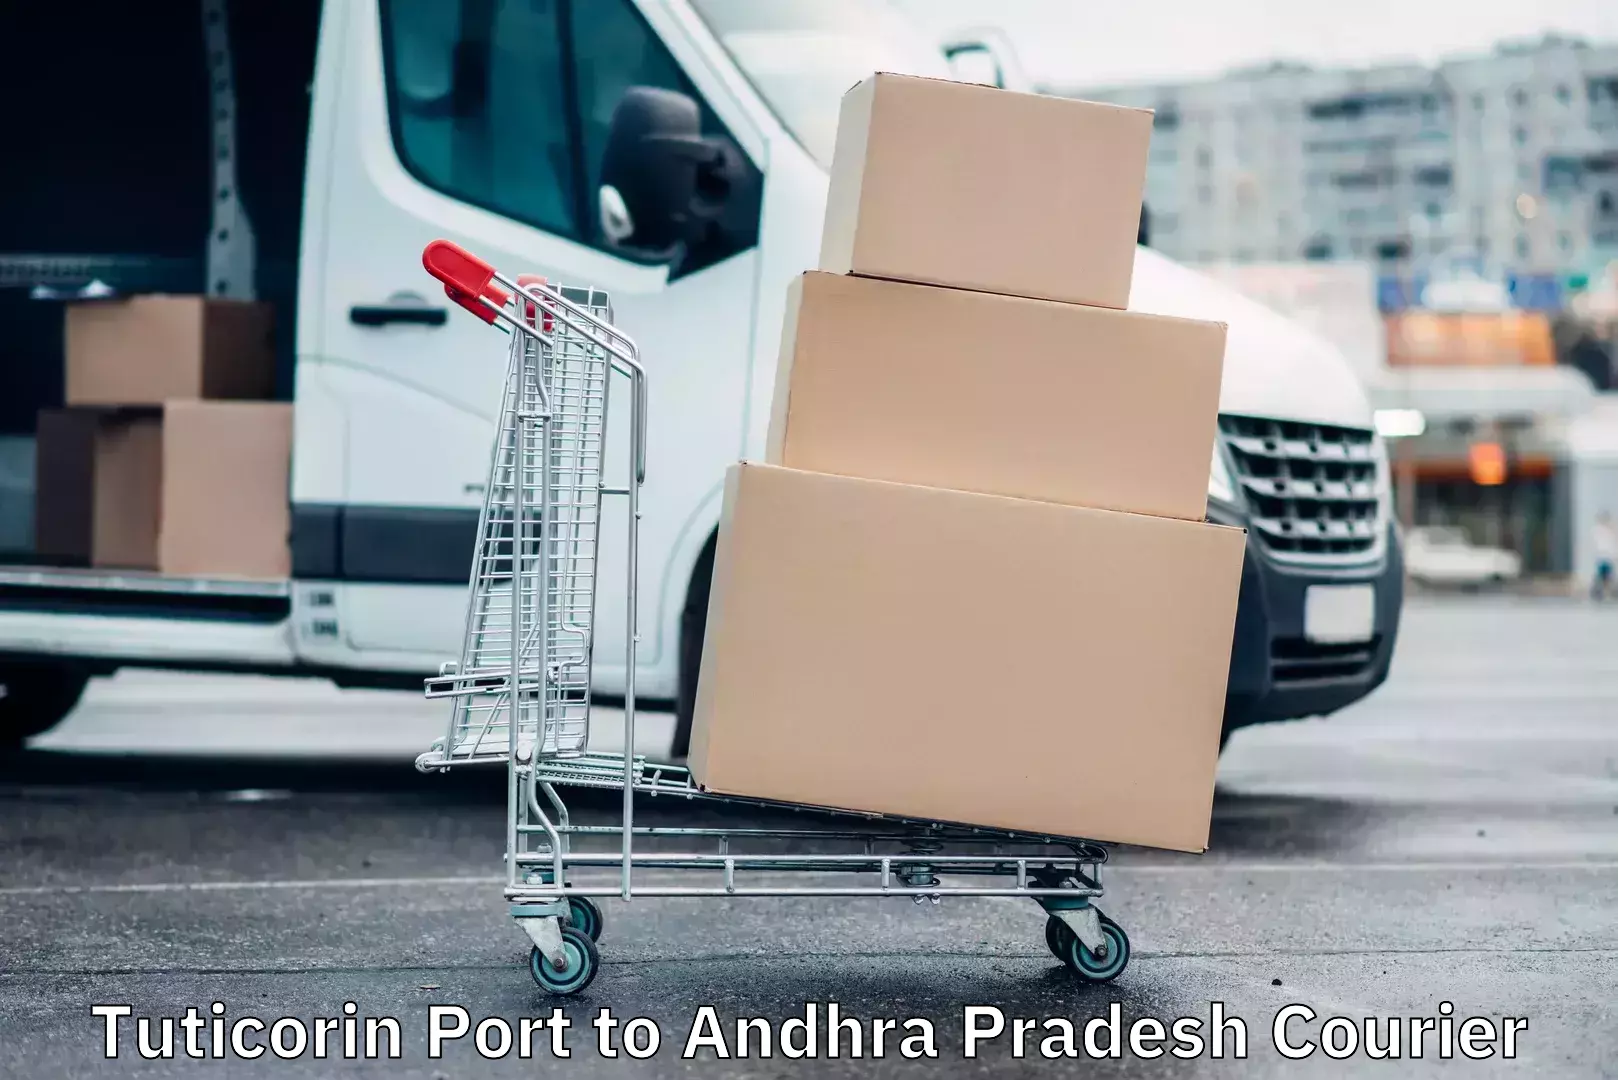 Multi-national courier services Tuticorin Port to Andhra Pradesh